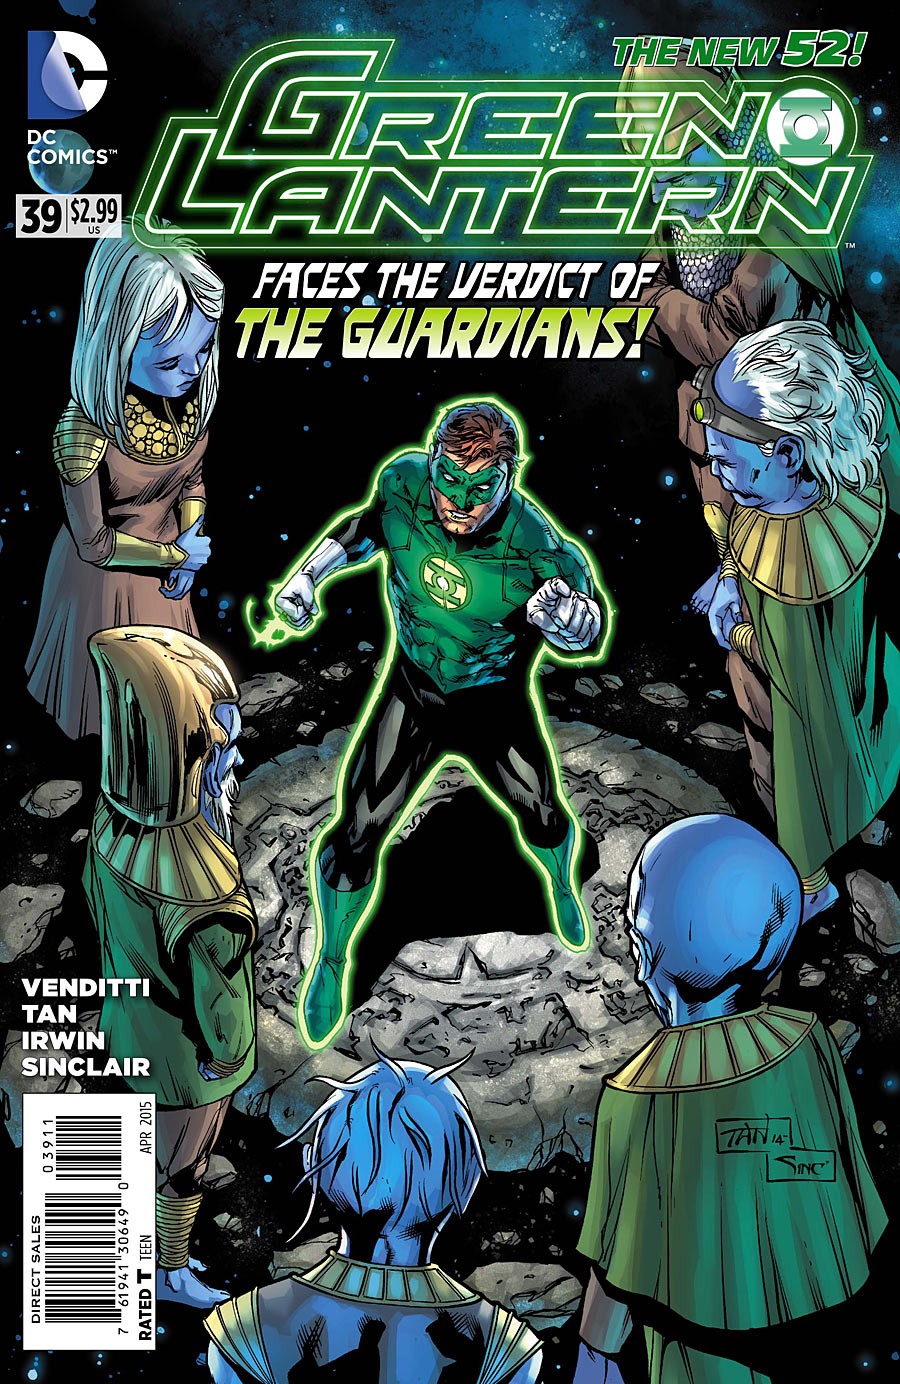 Green Lantern Vol. 5 #39